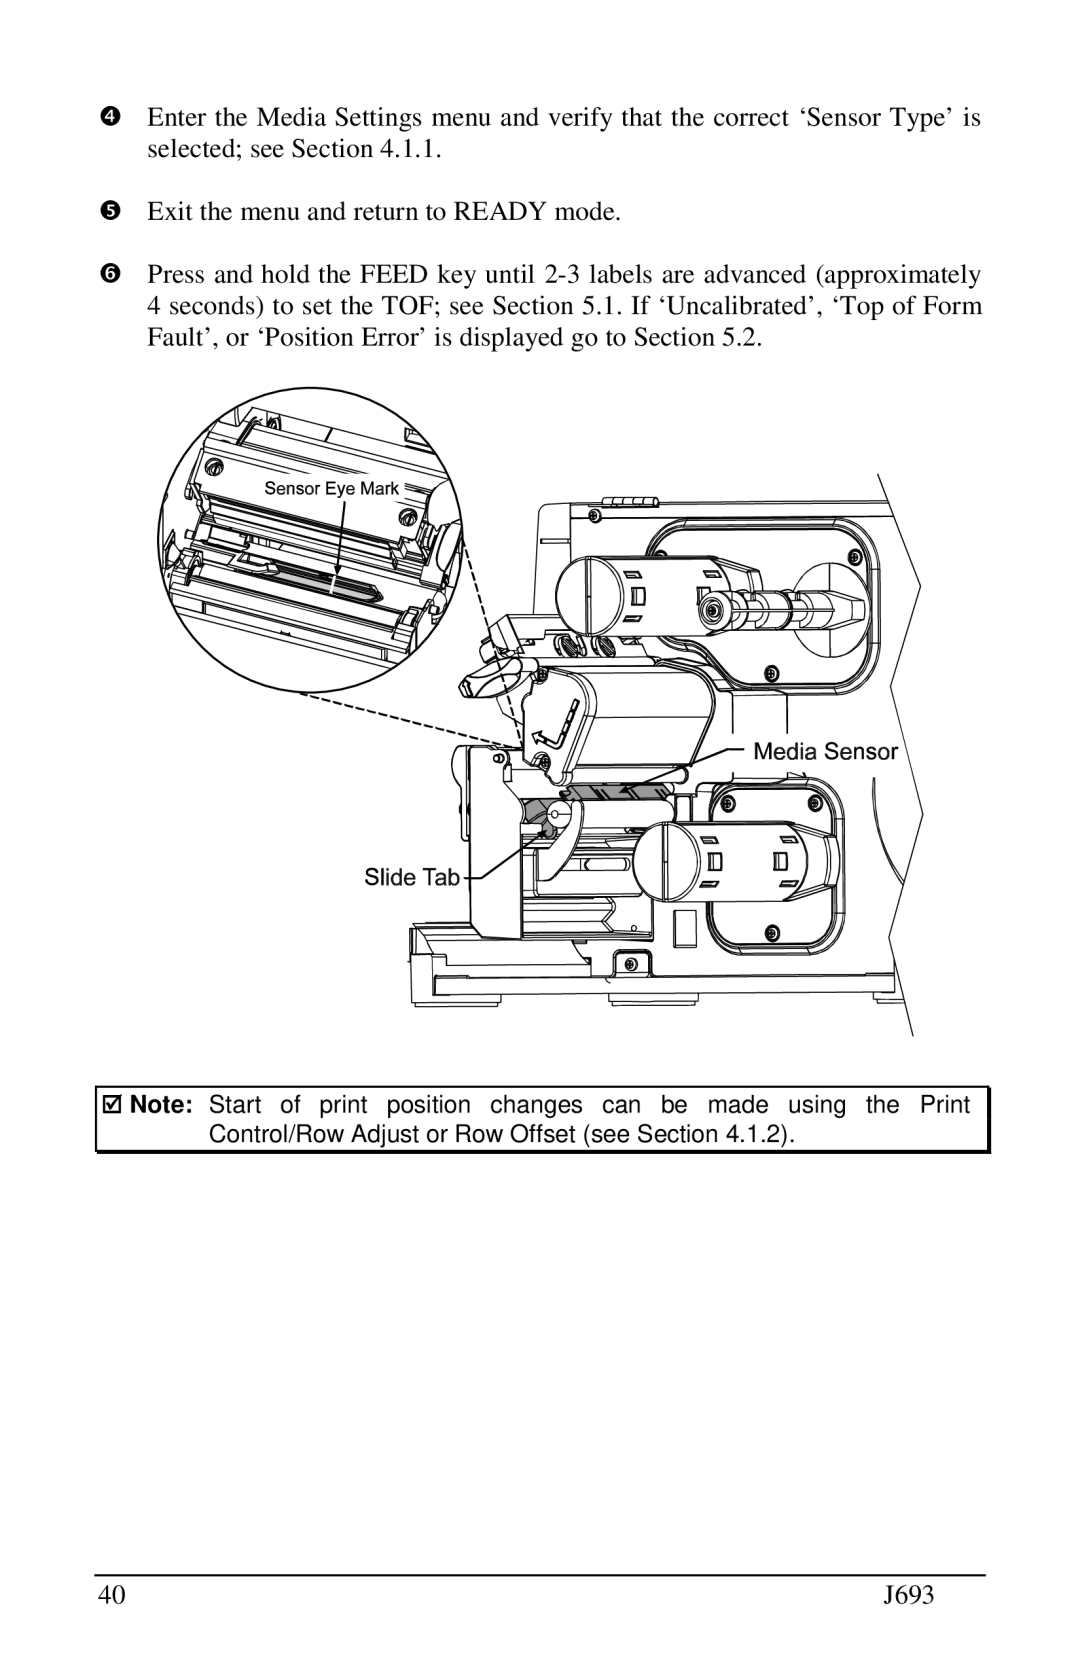 Pitney Bowes J693 manual 